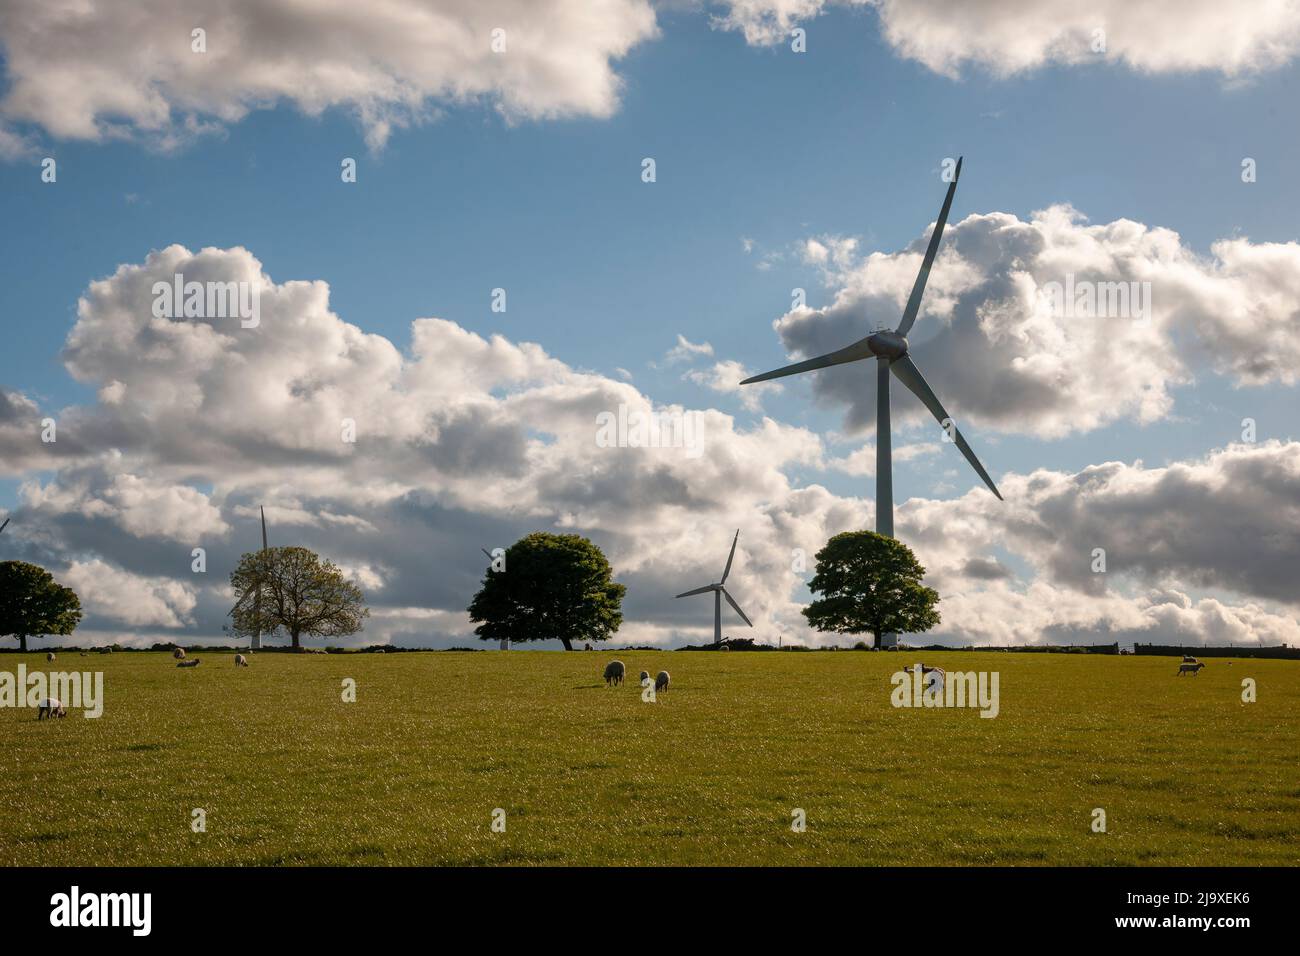 Sheep graze in fields below wind turbines on a cloudy Spring day Stock Photo